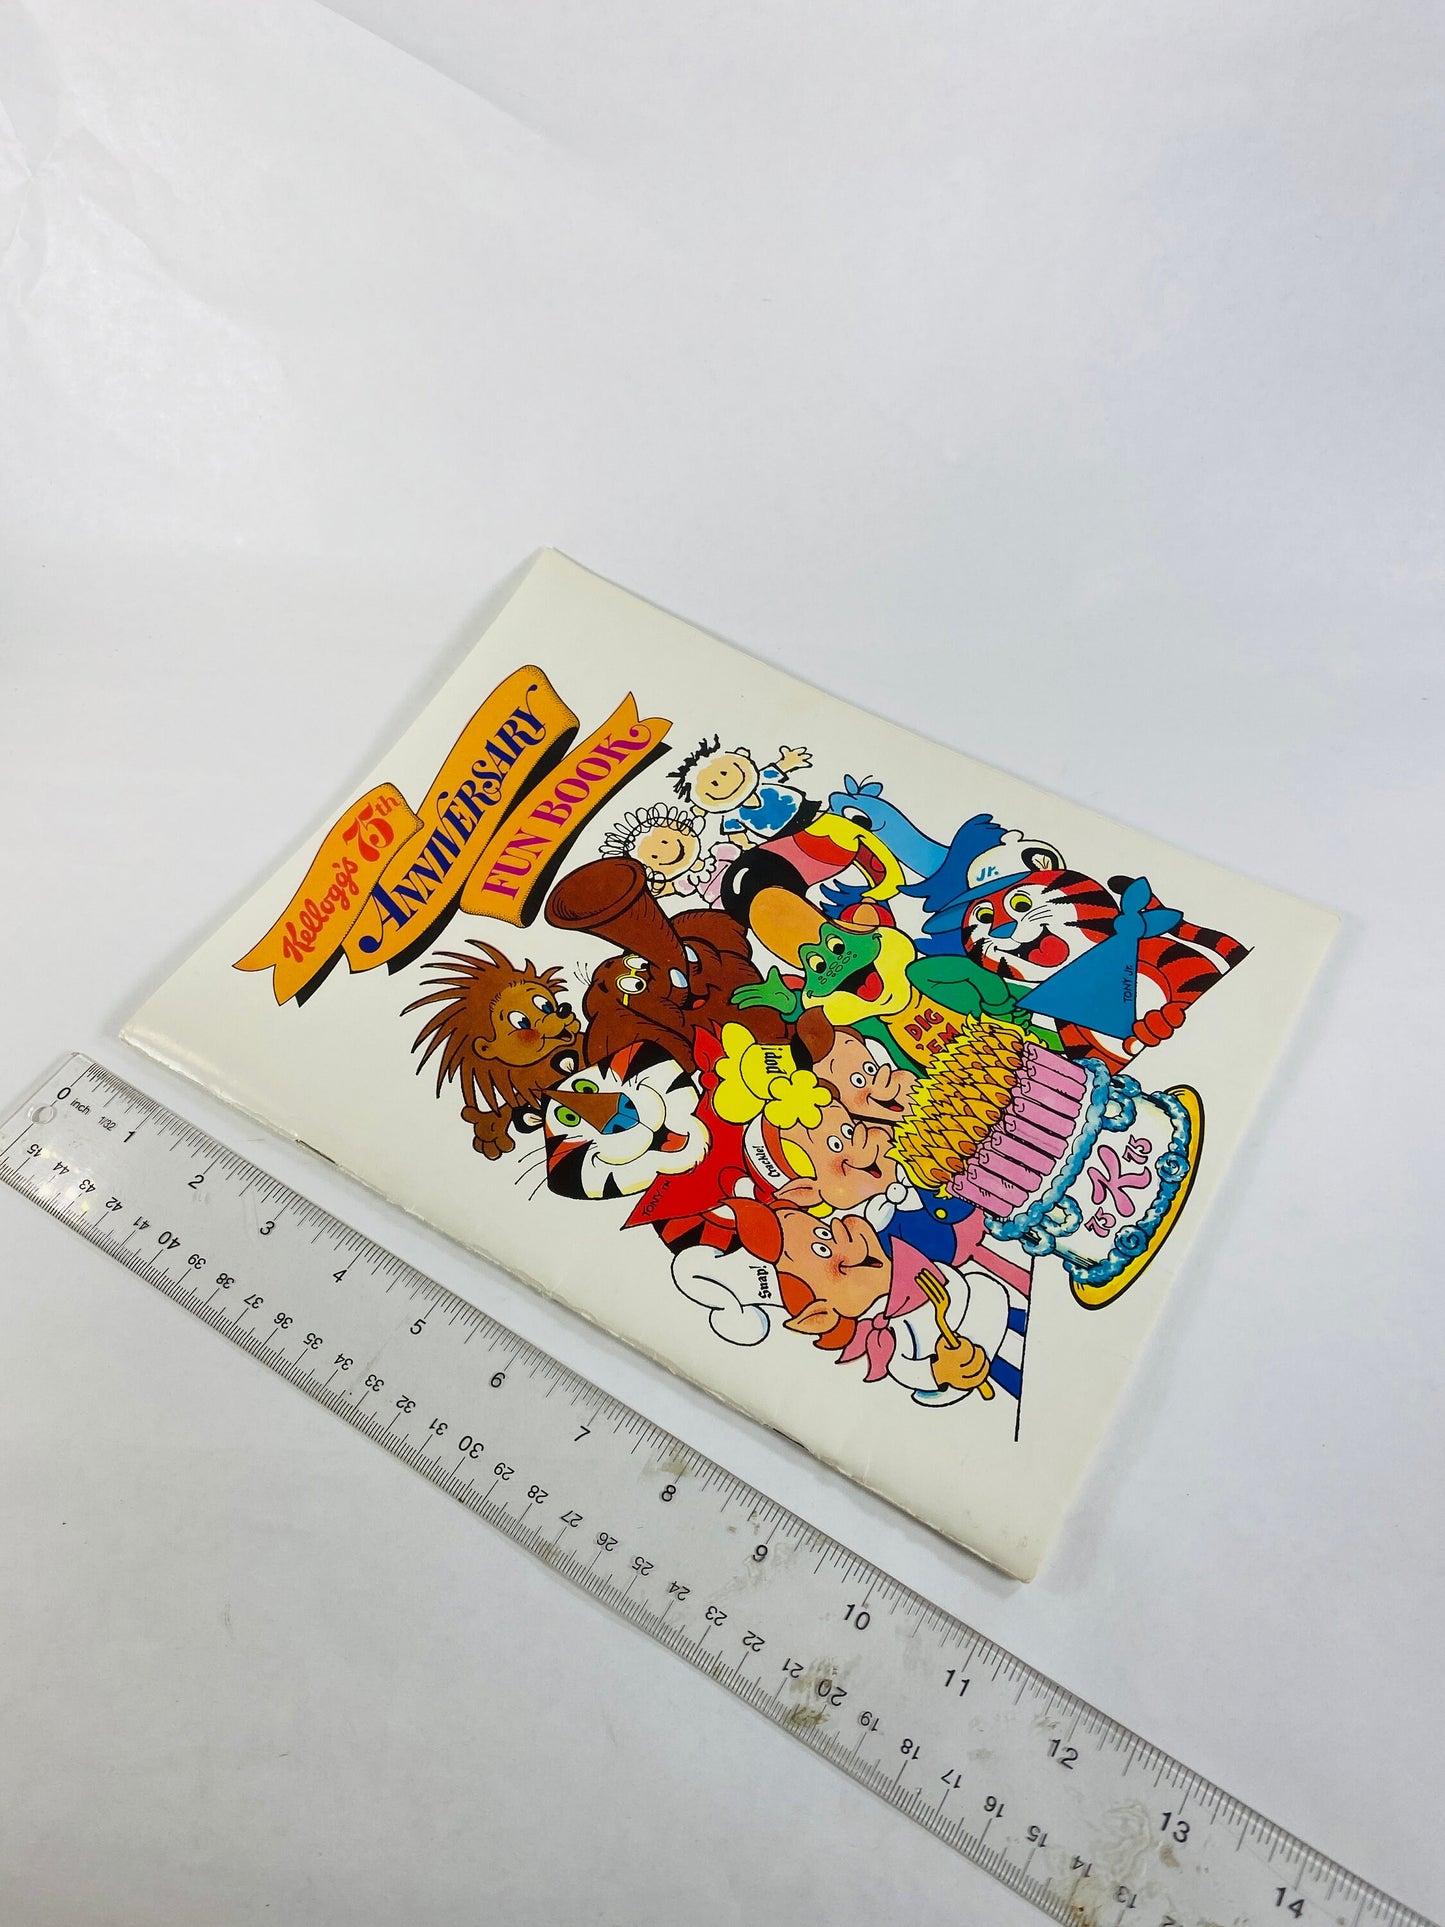 1980 Kellogg's 75th Anniversary Fun Coloring Book Vintage activity book for children. Tony Tiger, Honey Smacks, Rice Krispies